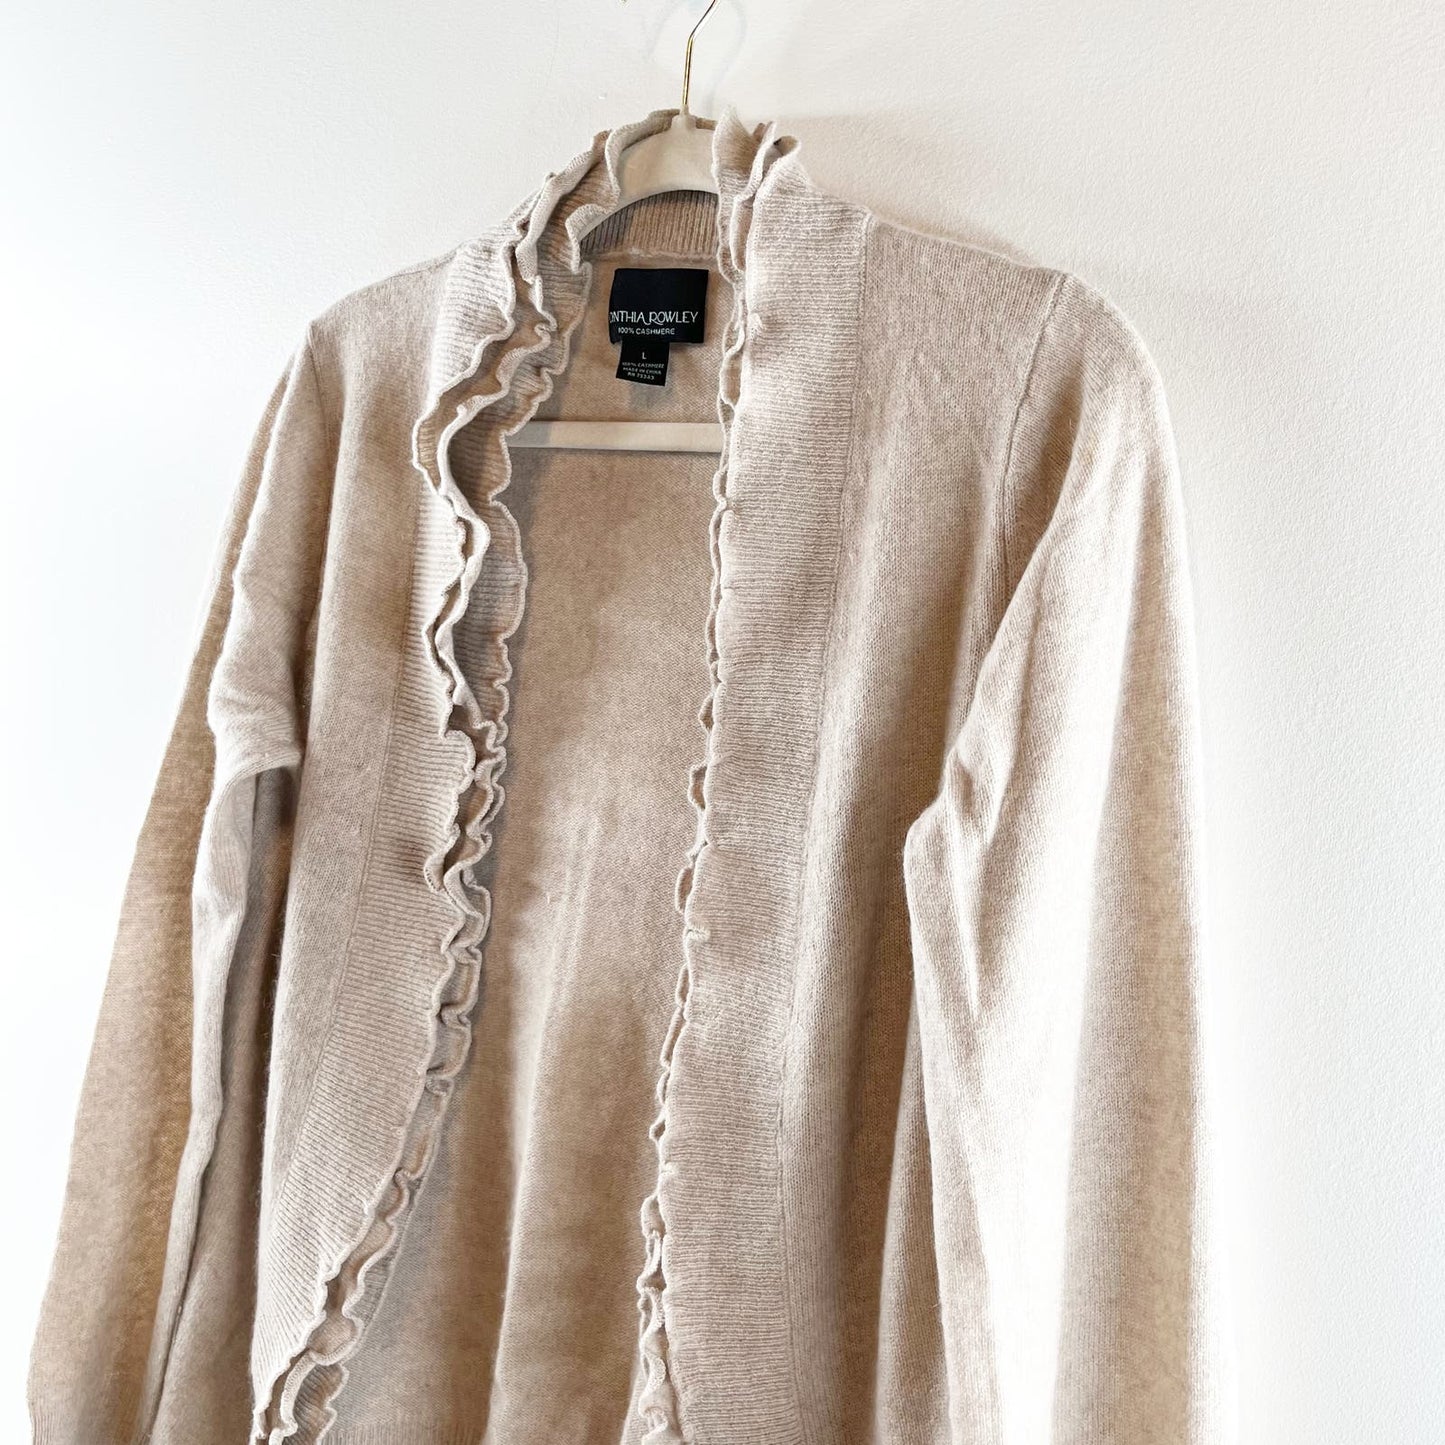 Cynthia Rowley 100% Cashmere Ruffle Trim Cardigan Sweater Beige Large